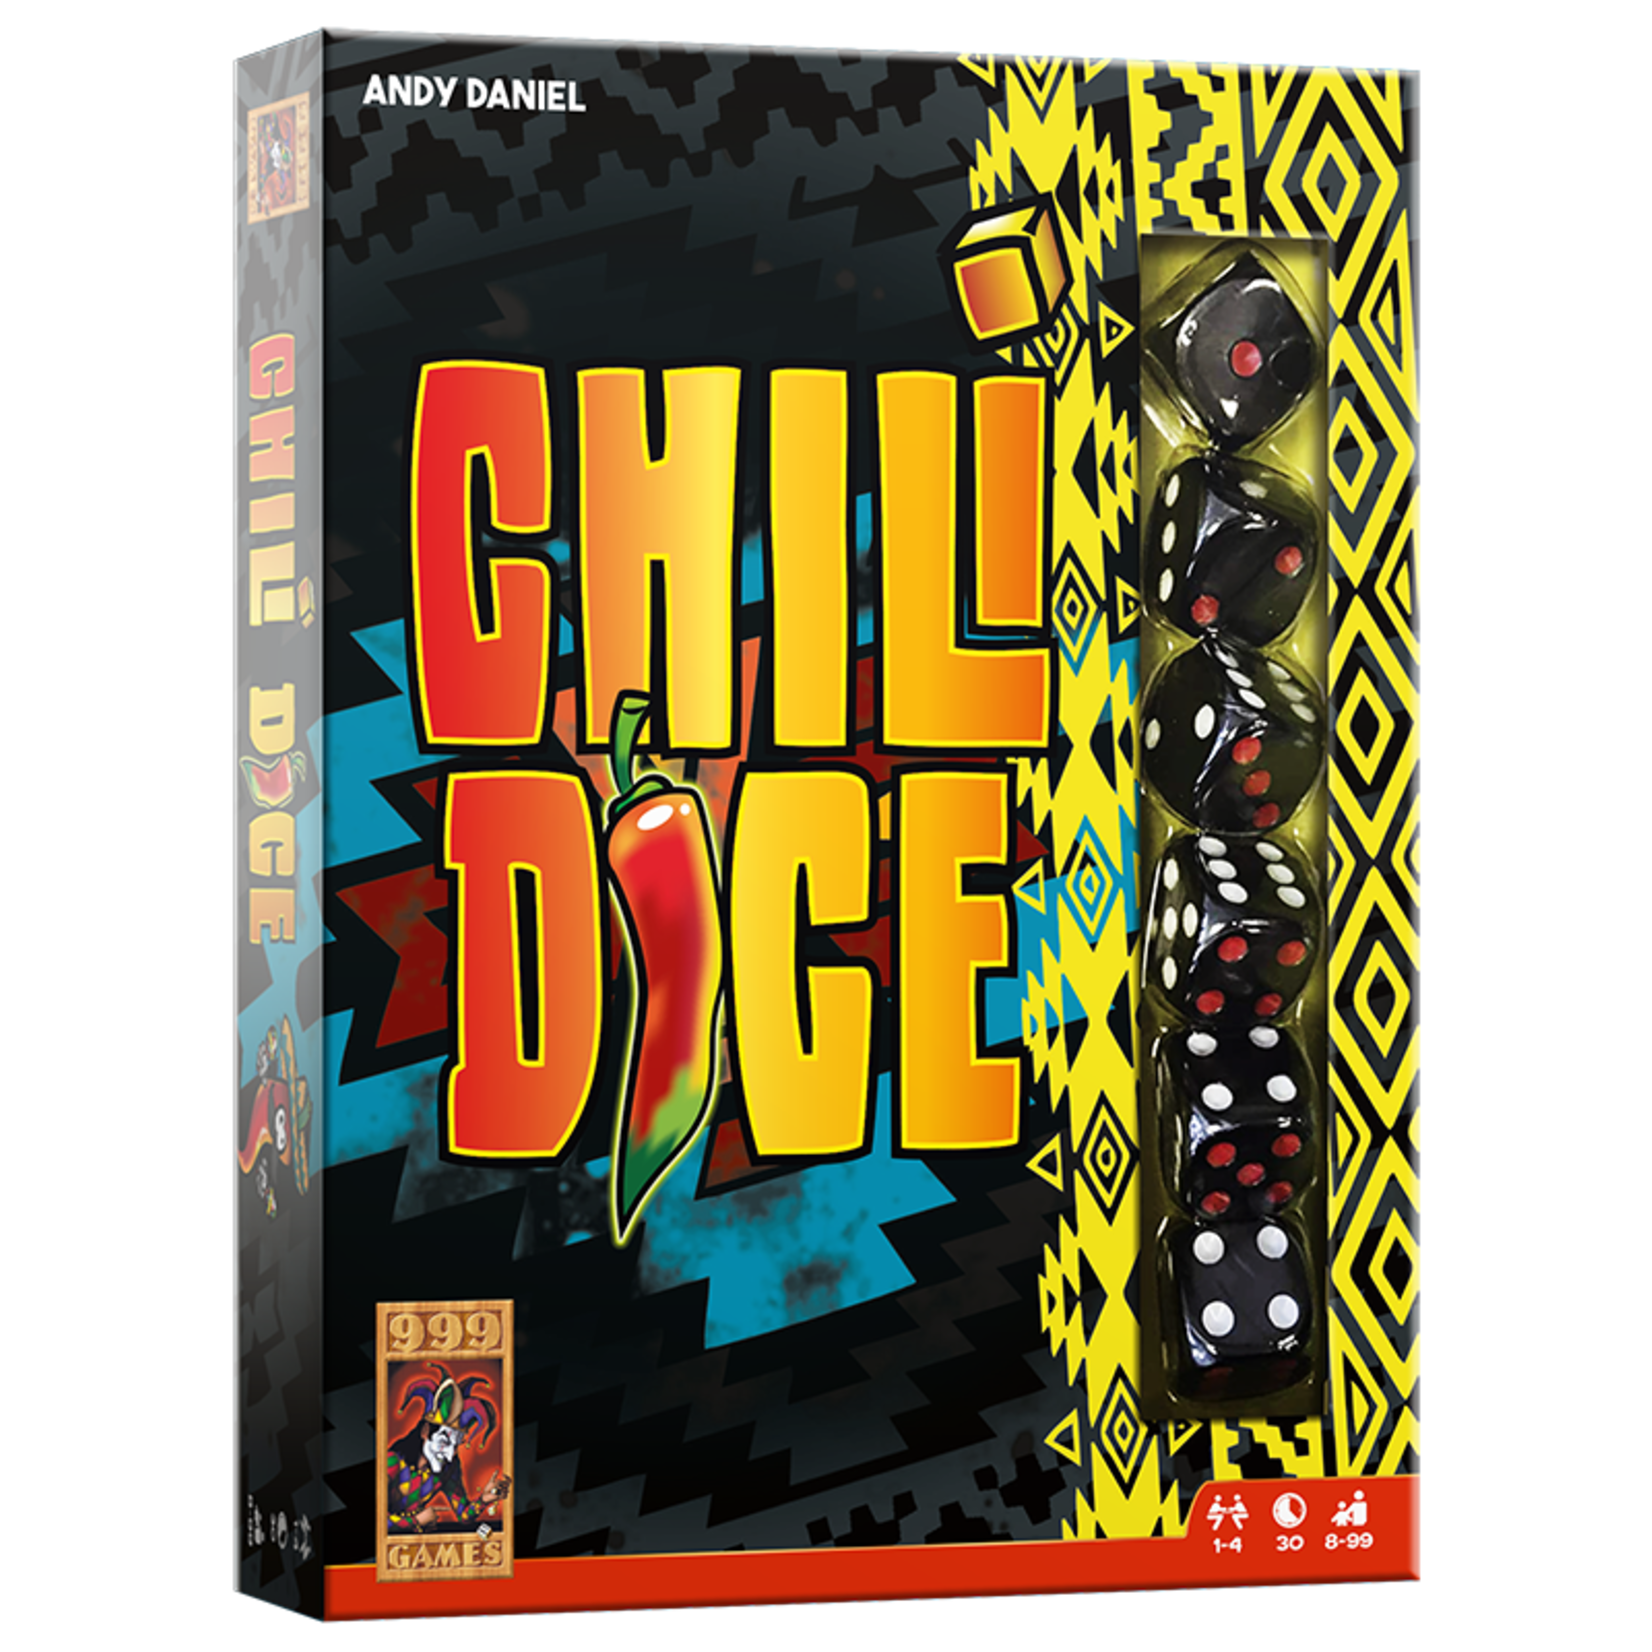 999-Games Chili Dice (NL)